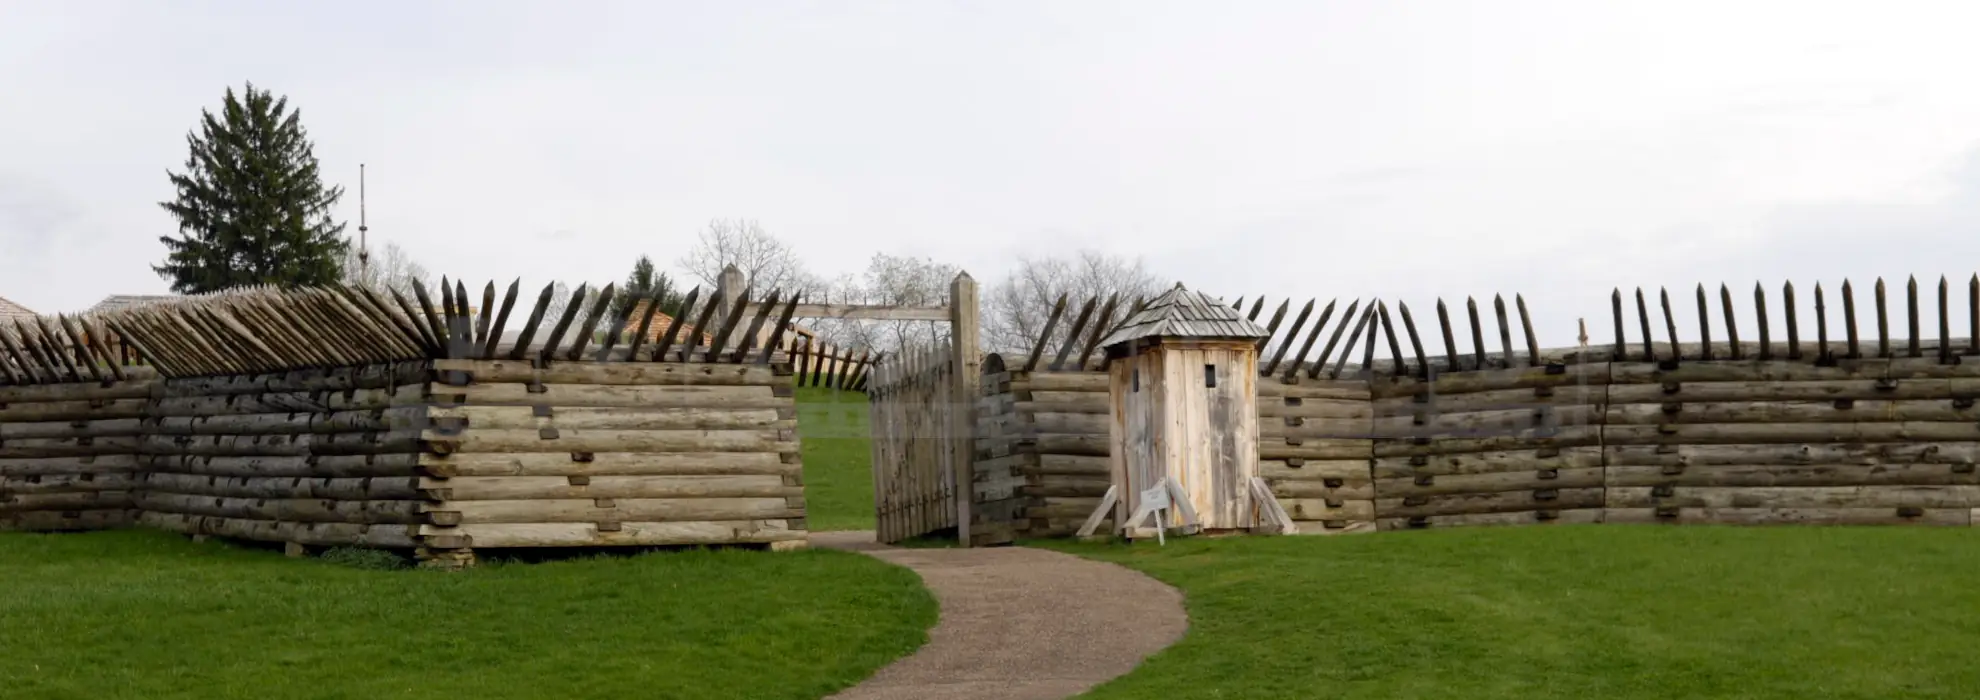 Fort Ligonier Wooden structure in Pennsylvania